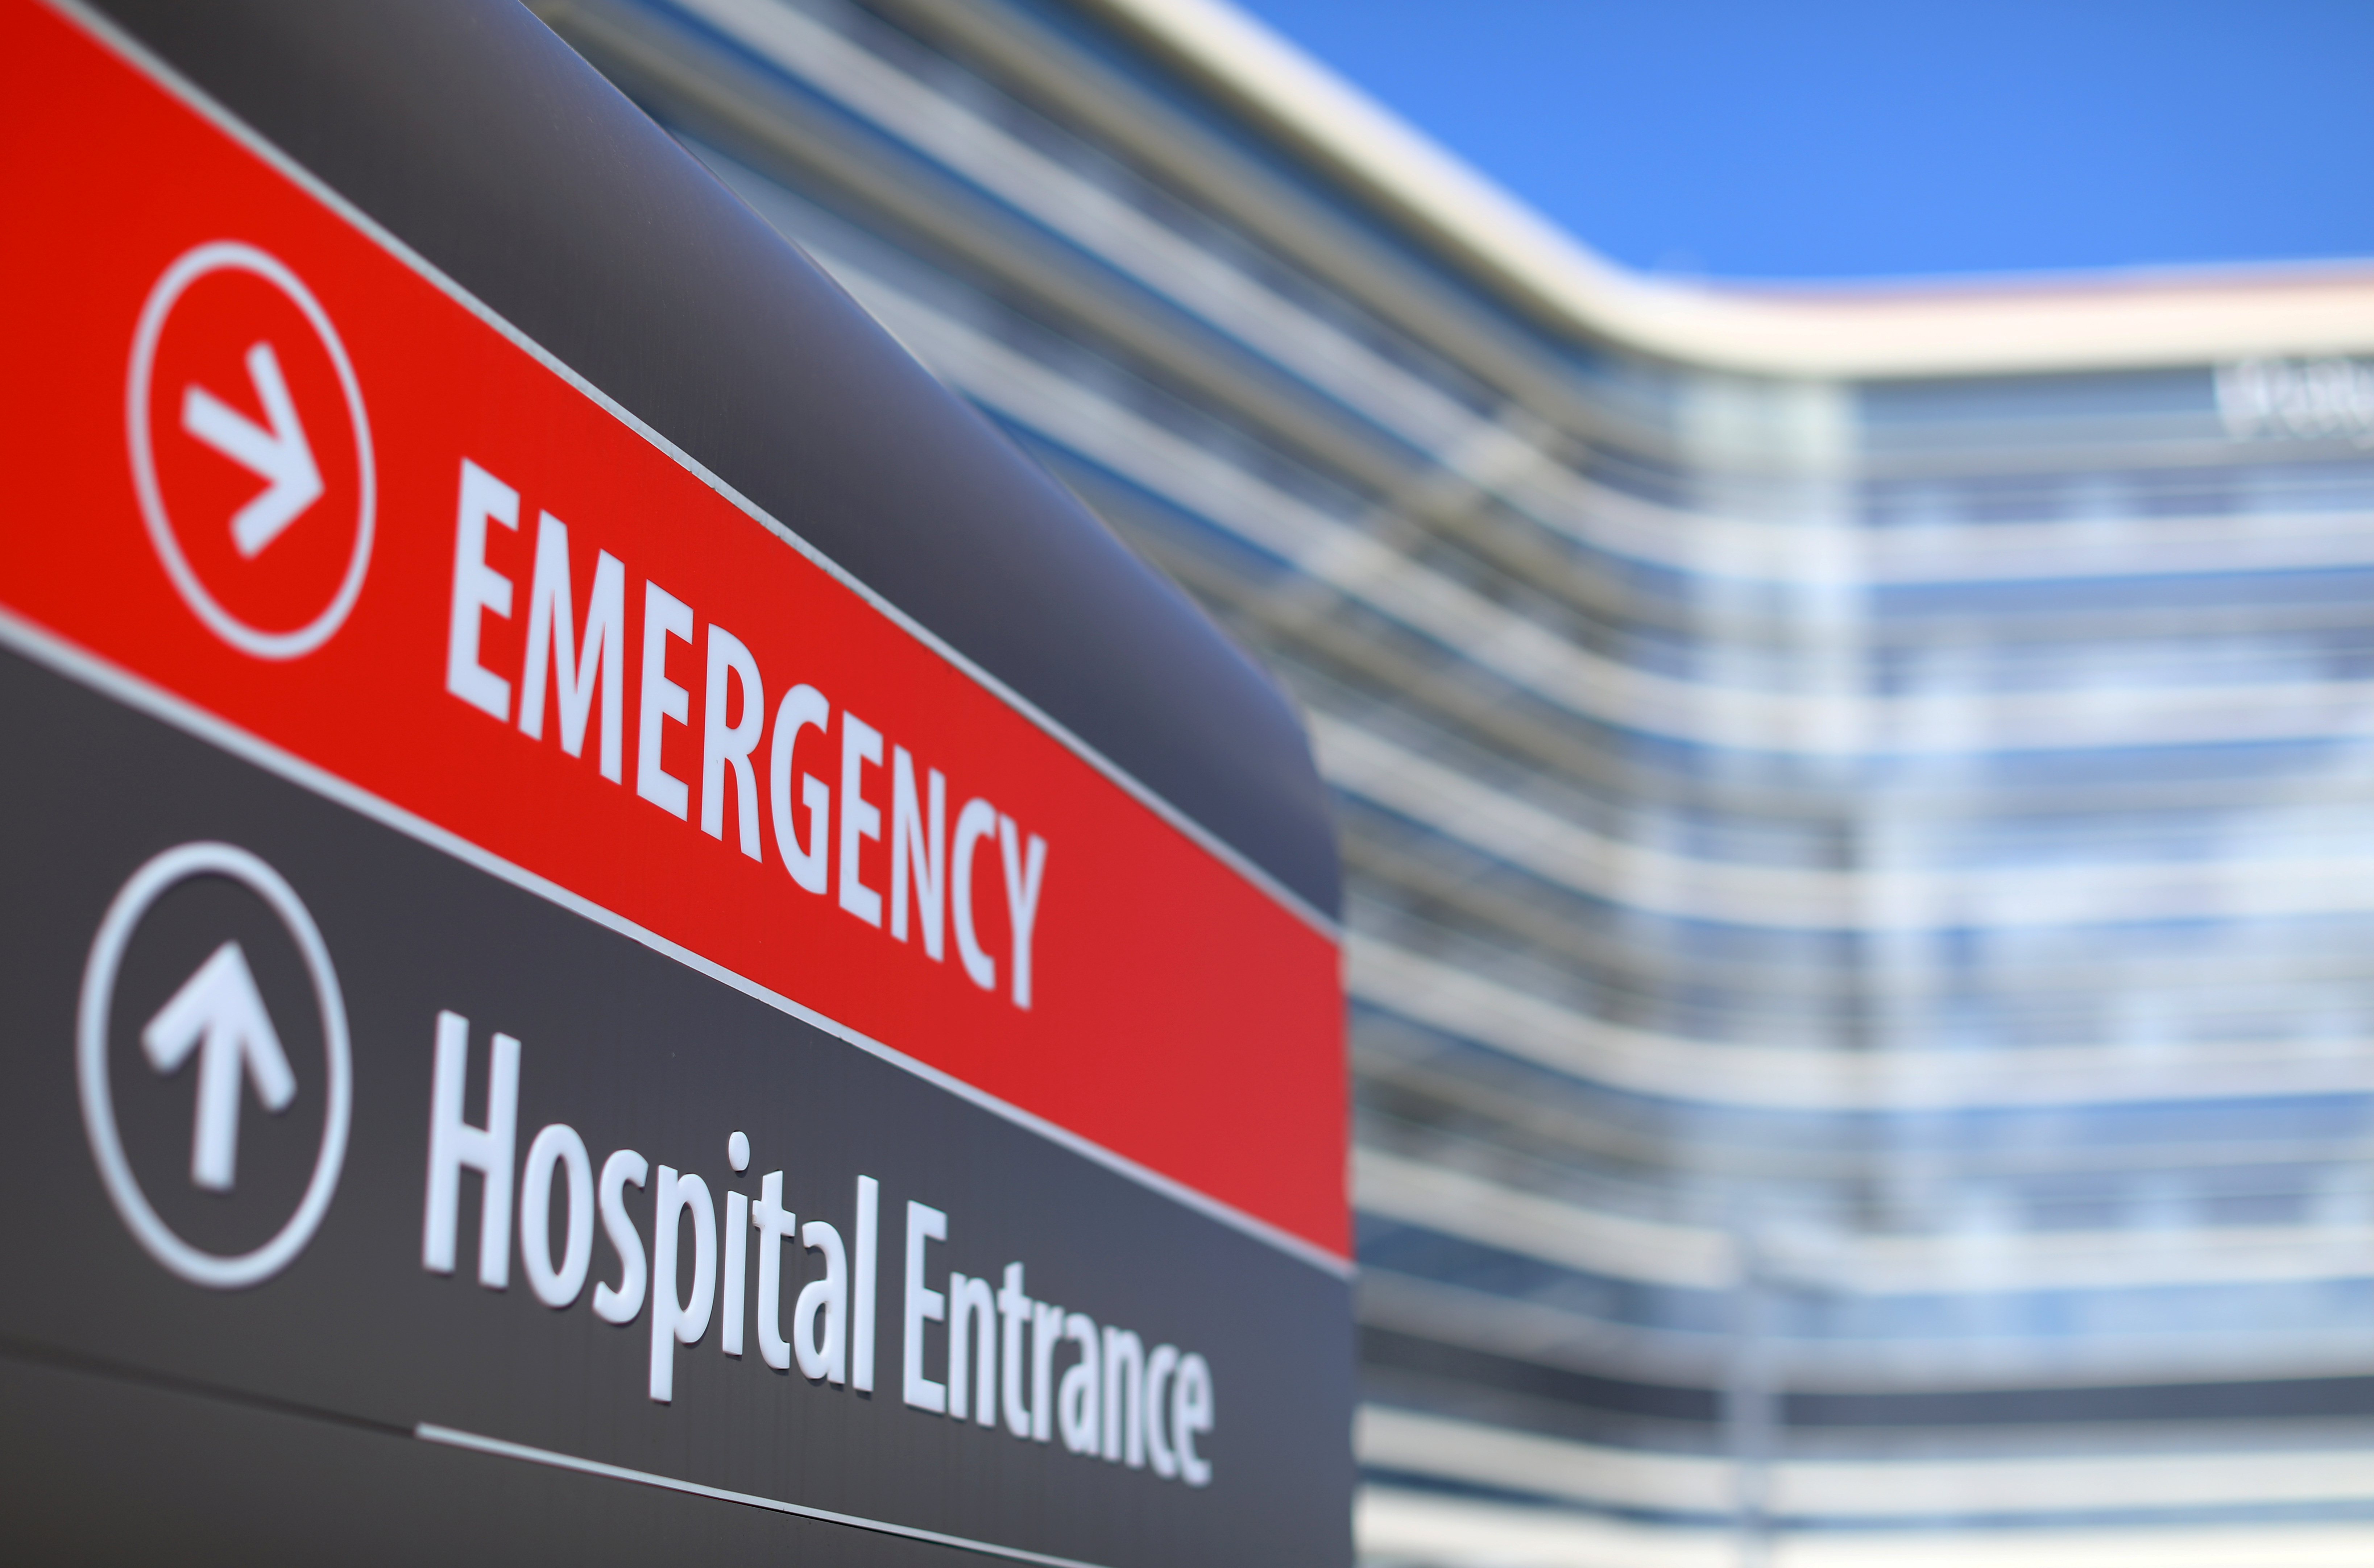 Hospital emergency sign in California